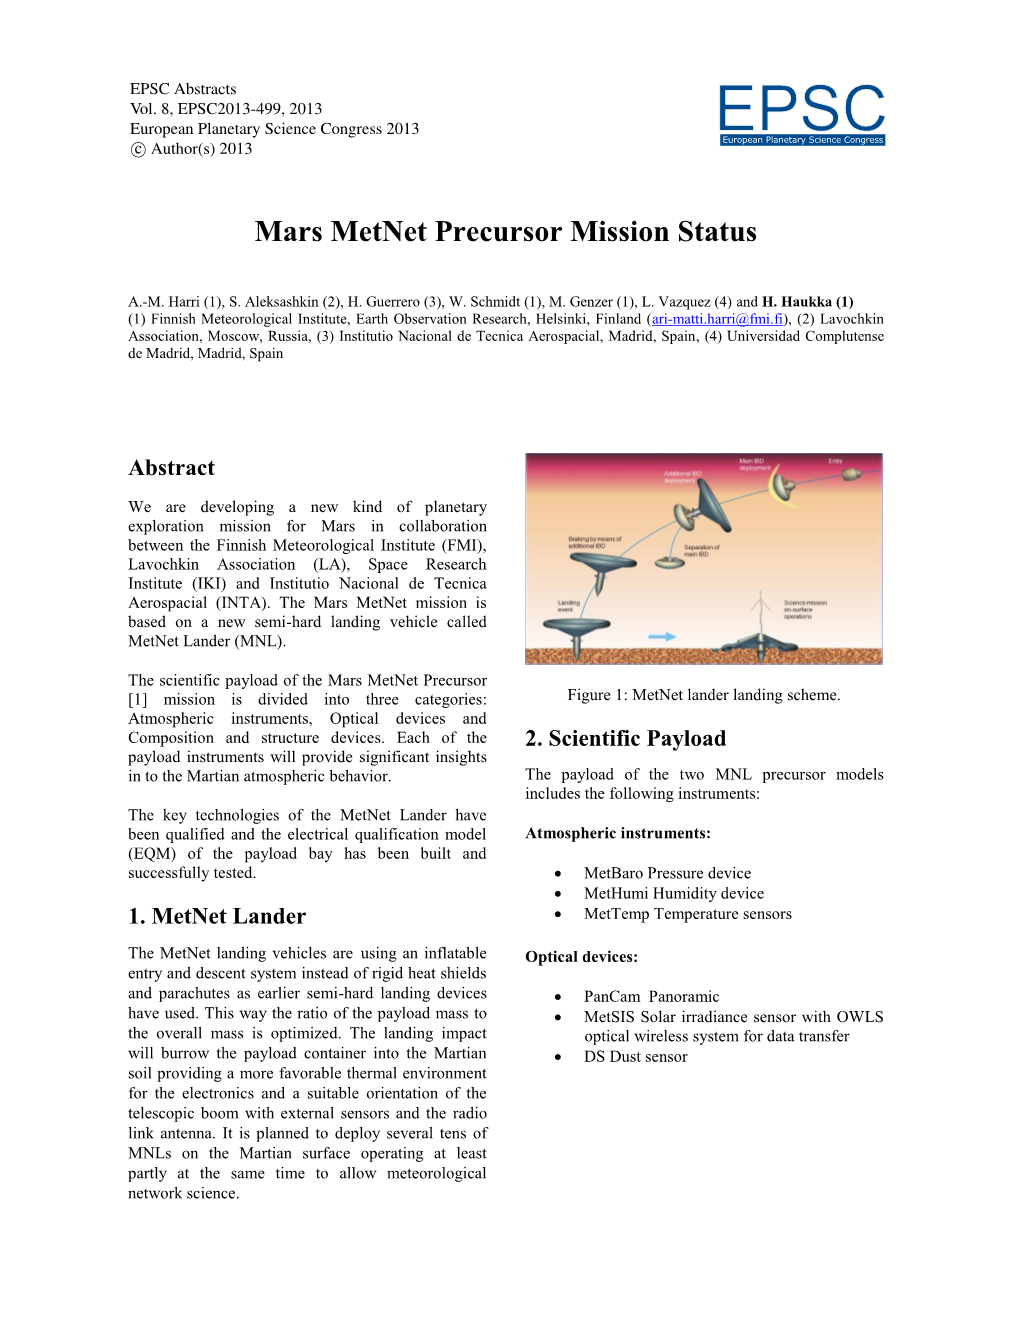 Mars Metnet Precursor Mission Status